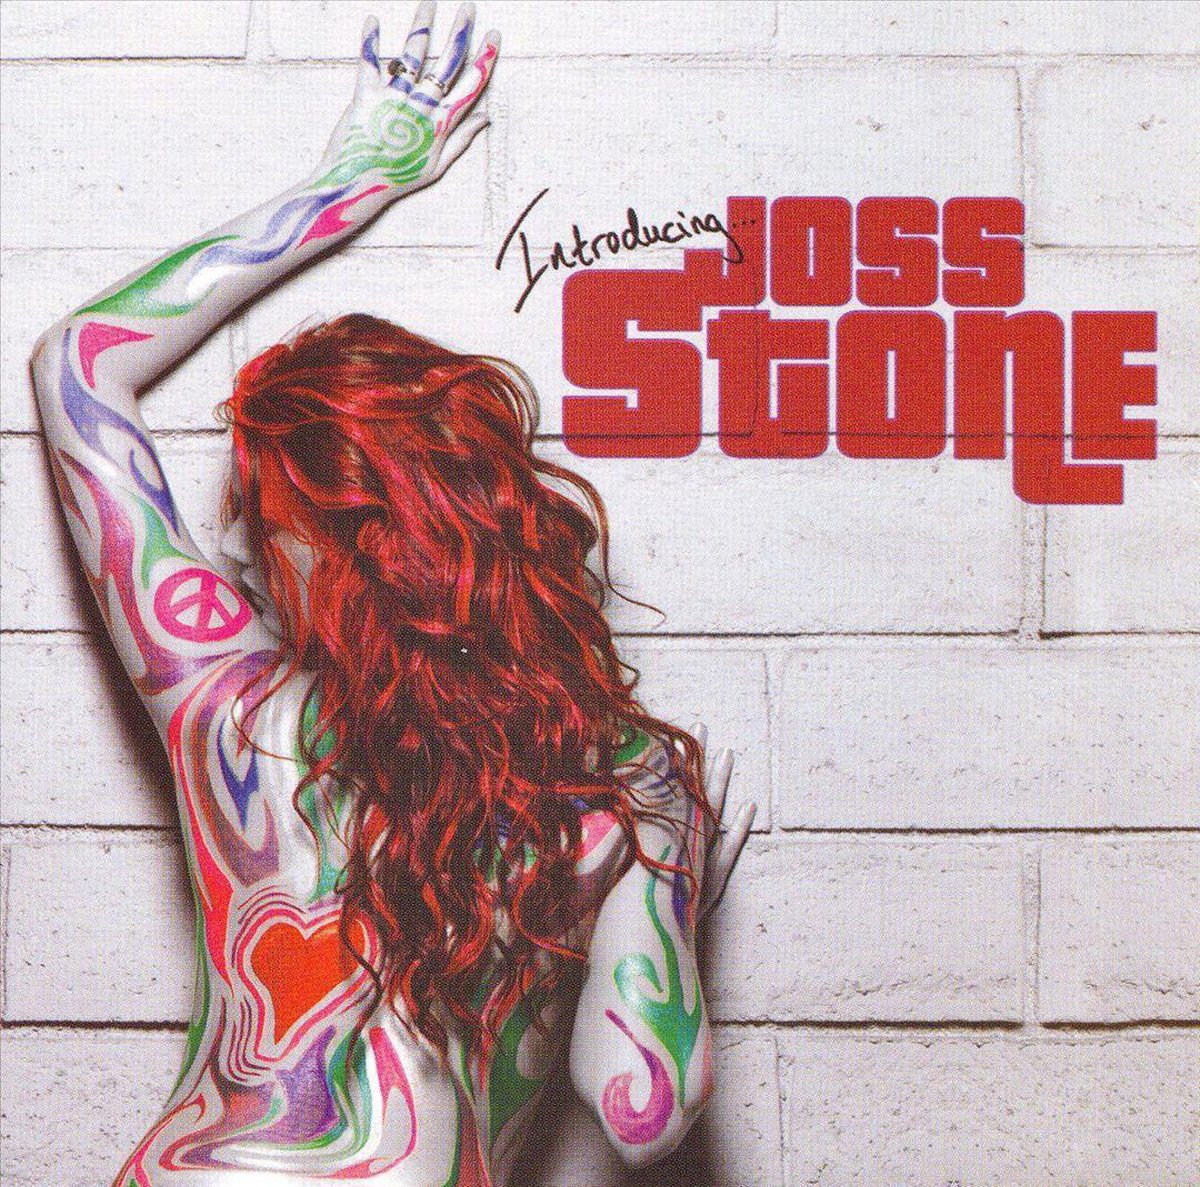 Introducing Joss Stone - Joss Stone